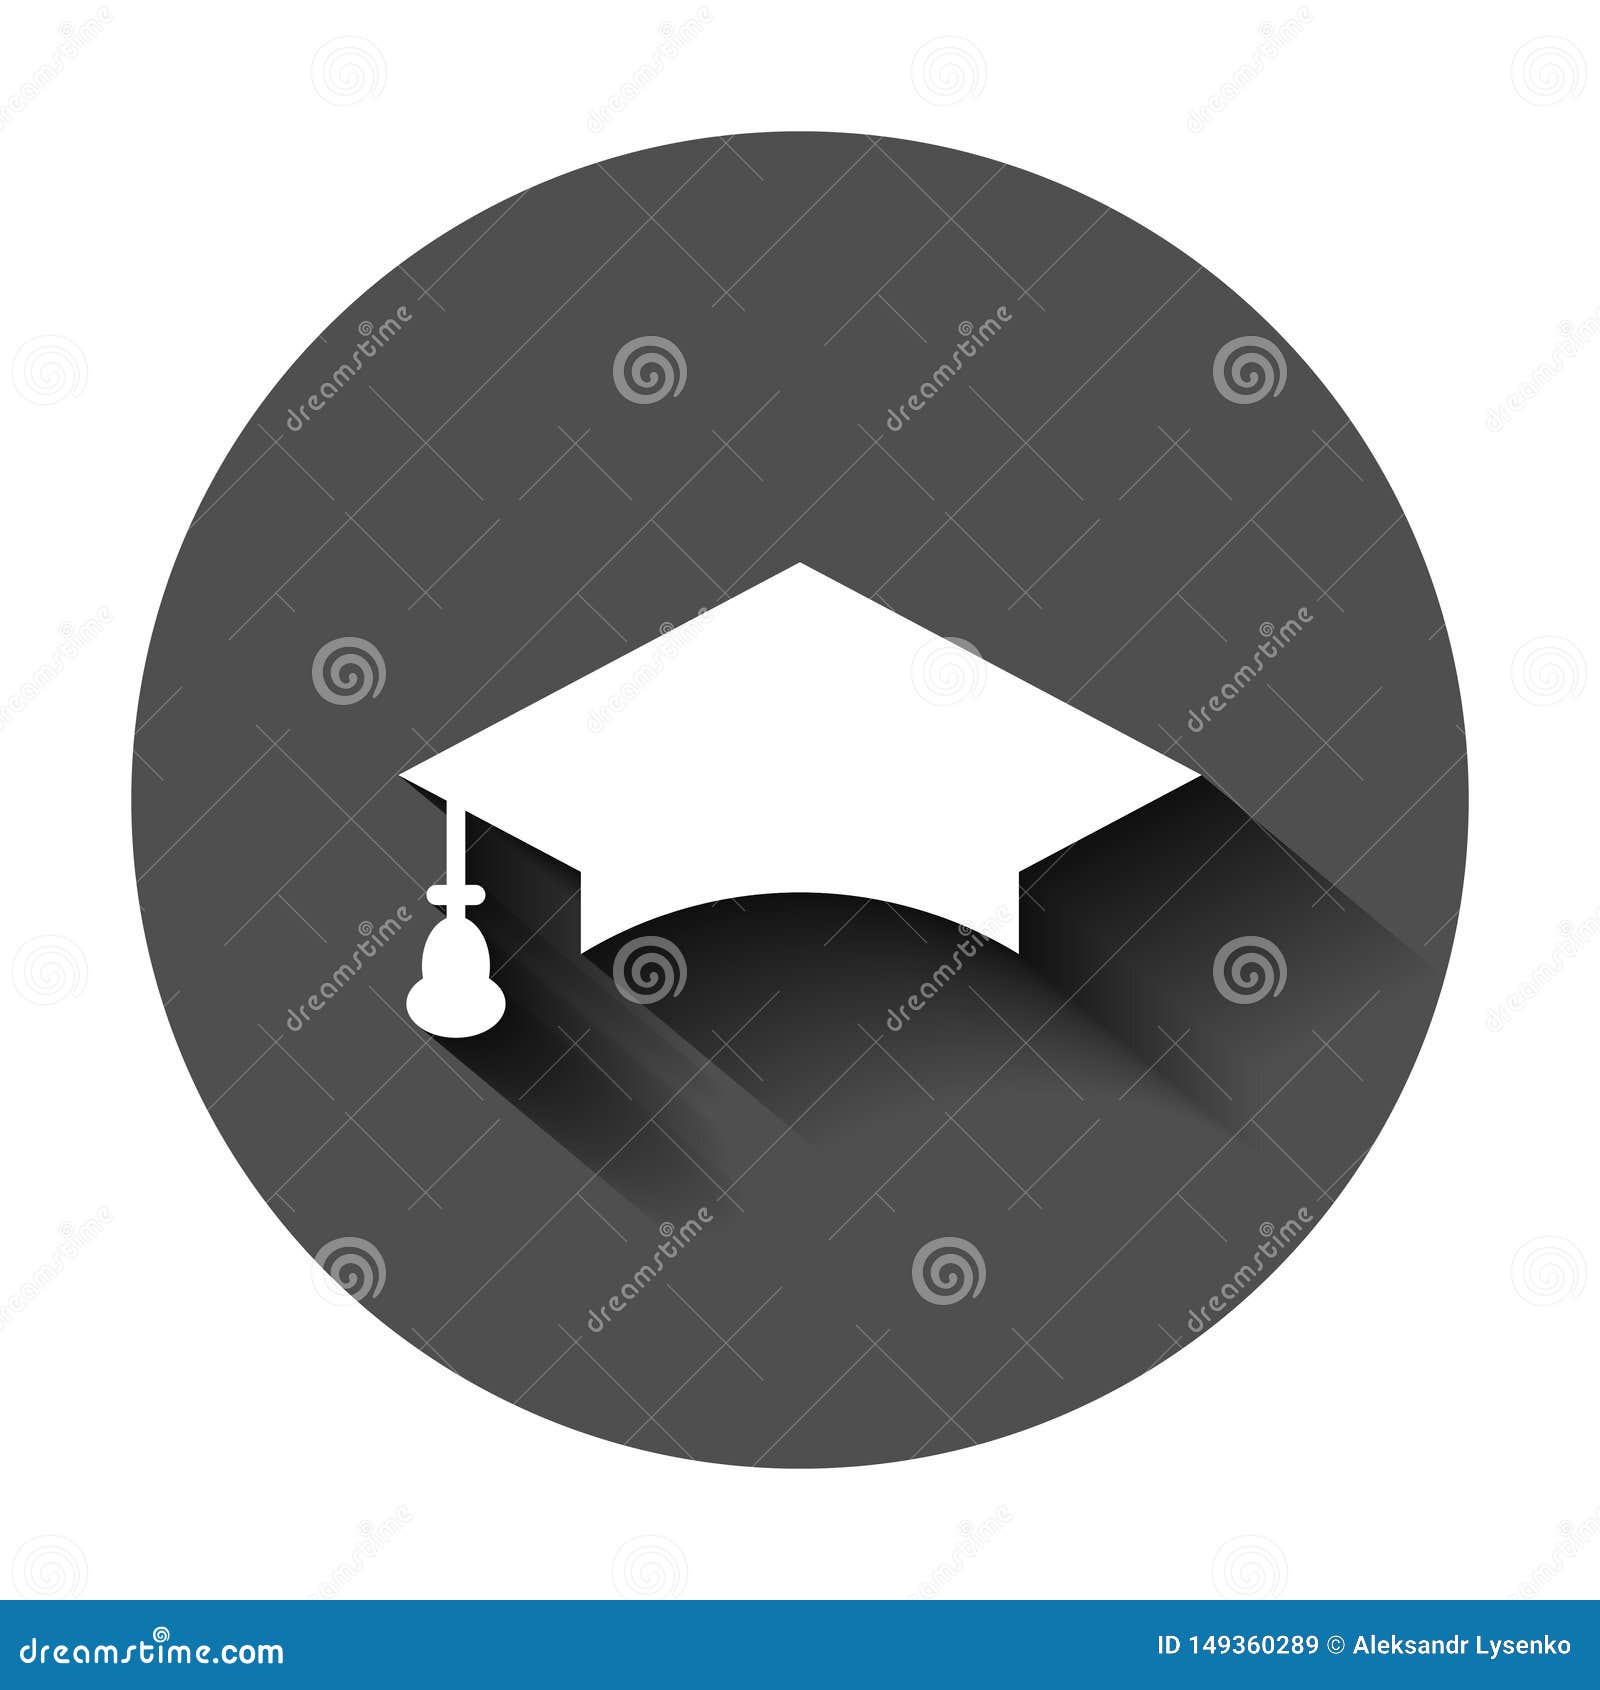 Graduation Cap Icon in Flat Style. Education Hat Vector Illustration on ...